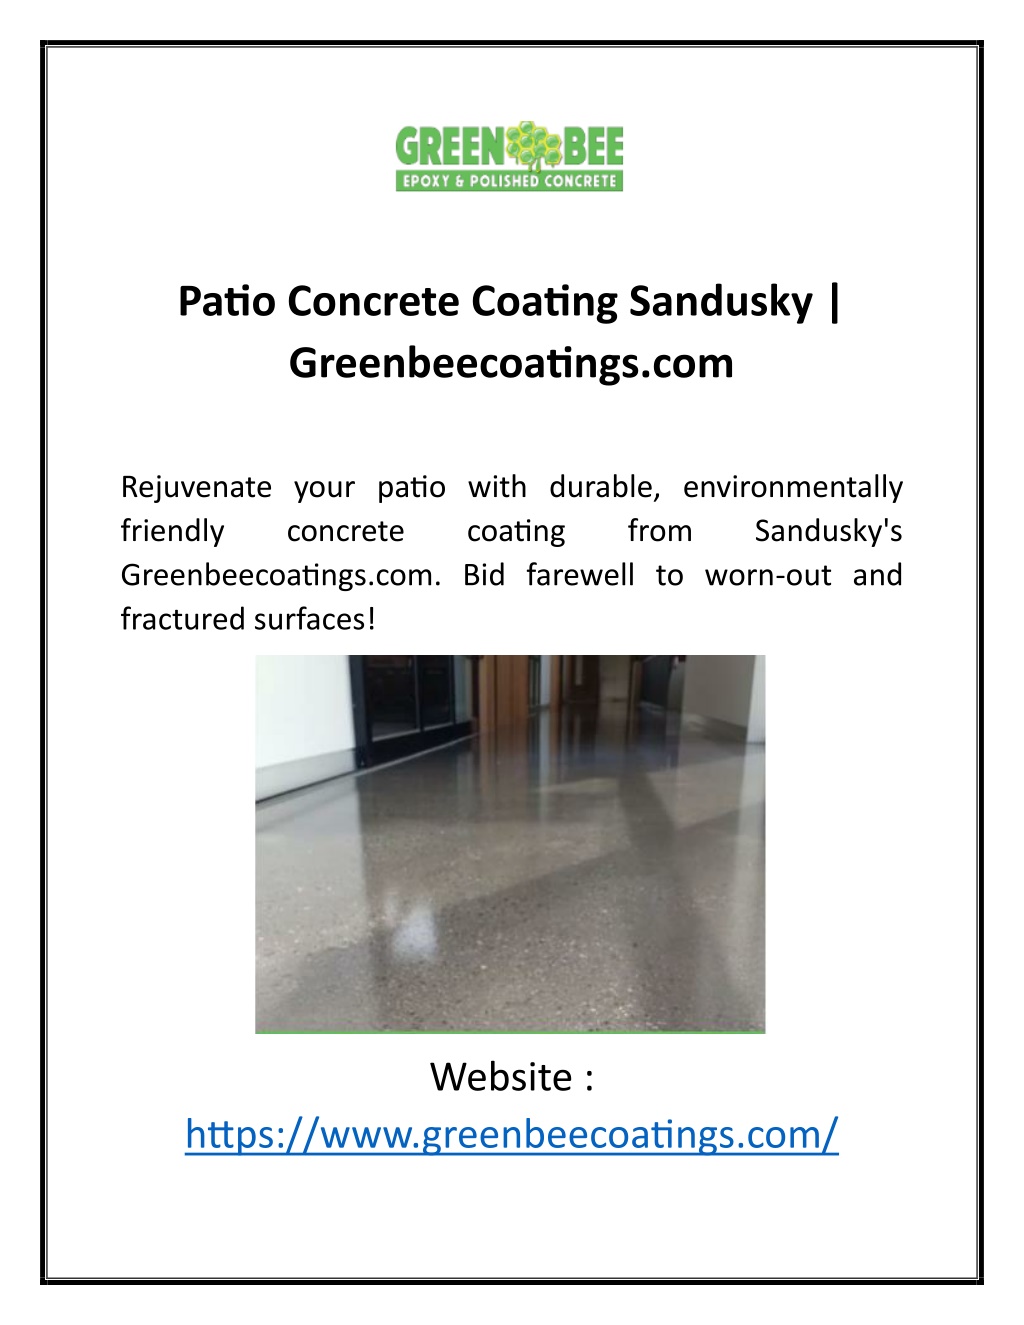 patio concrete coating sandusky greenbeecoatings l.w